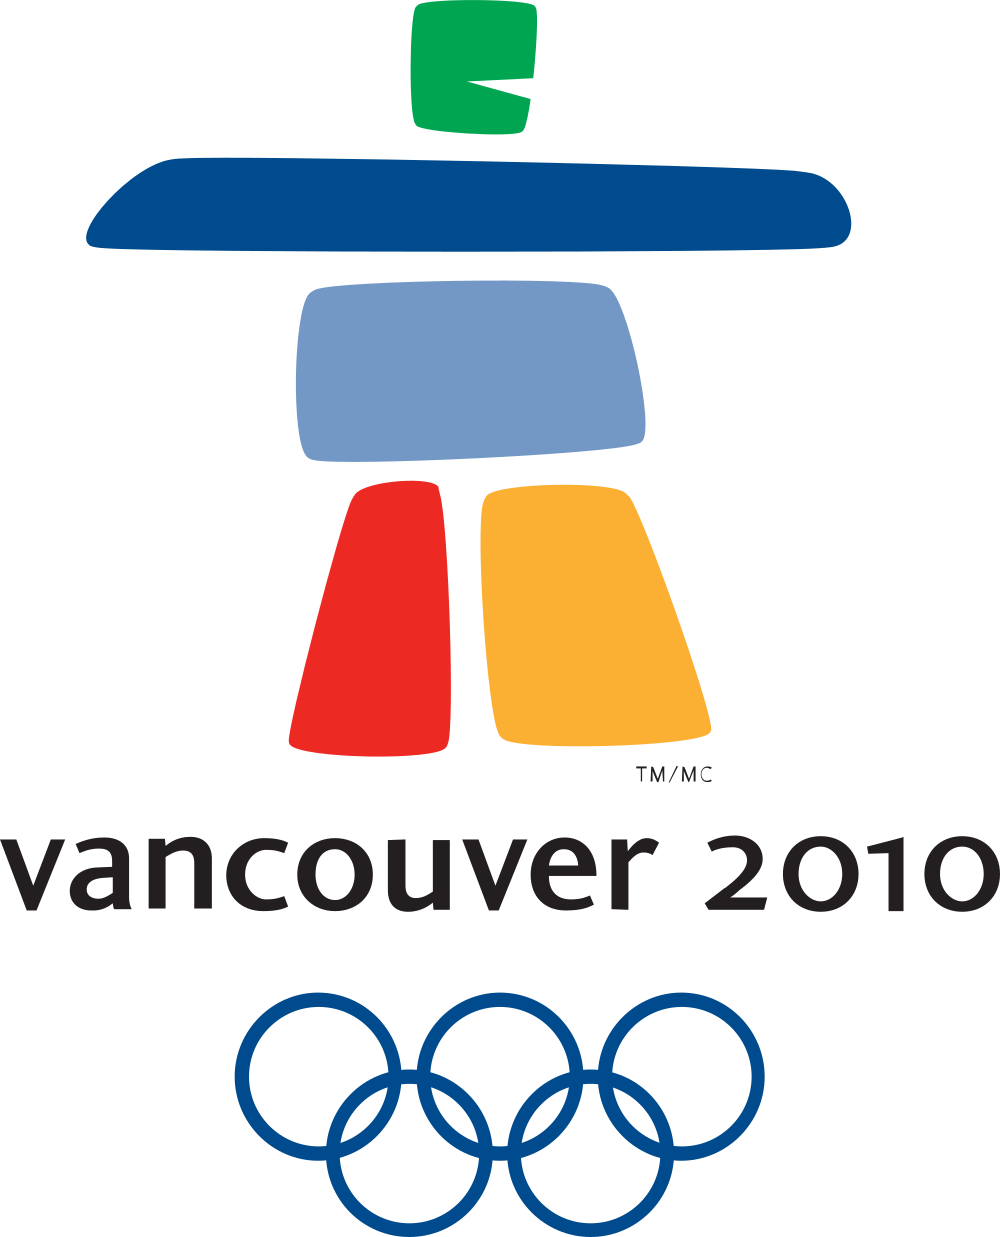 2010 Vancouver Winter Olympics logo png transparent